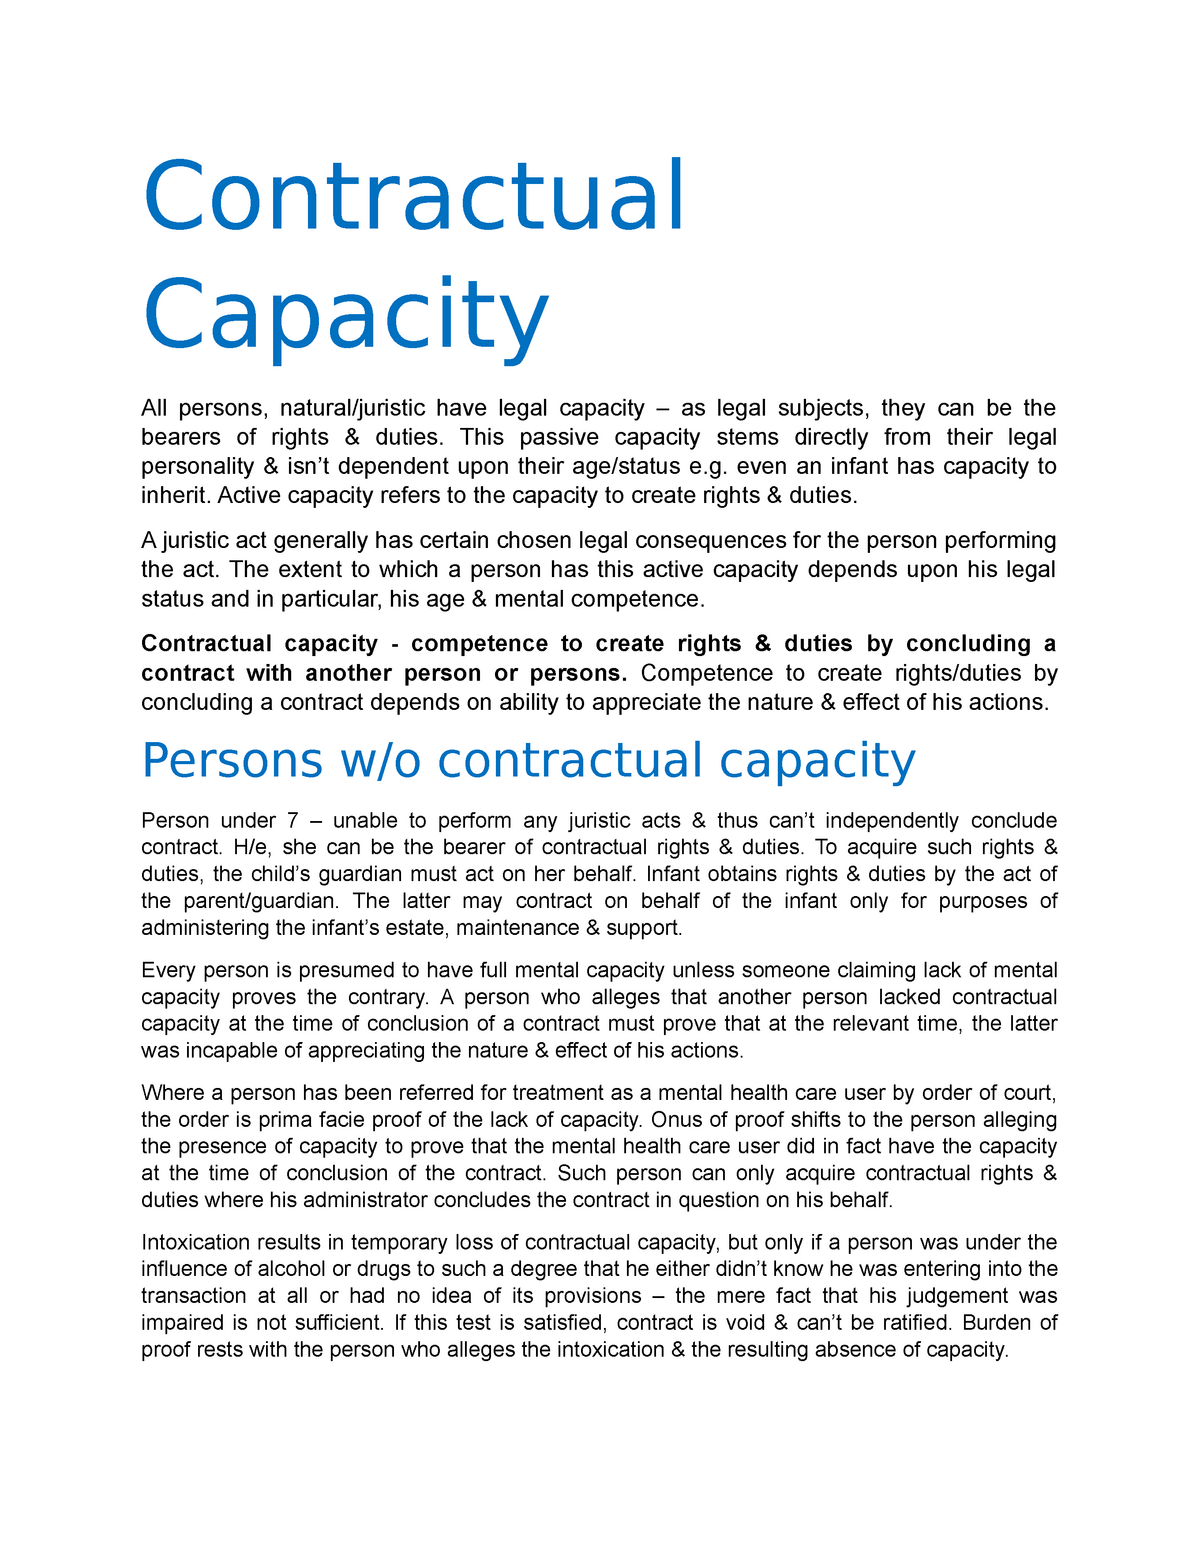 assignment worksheet 12 3 contractual capacity